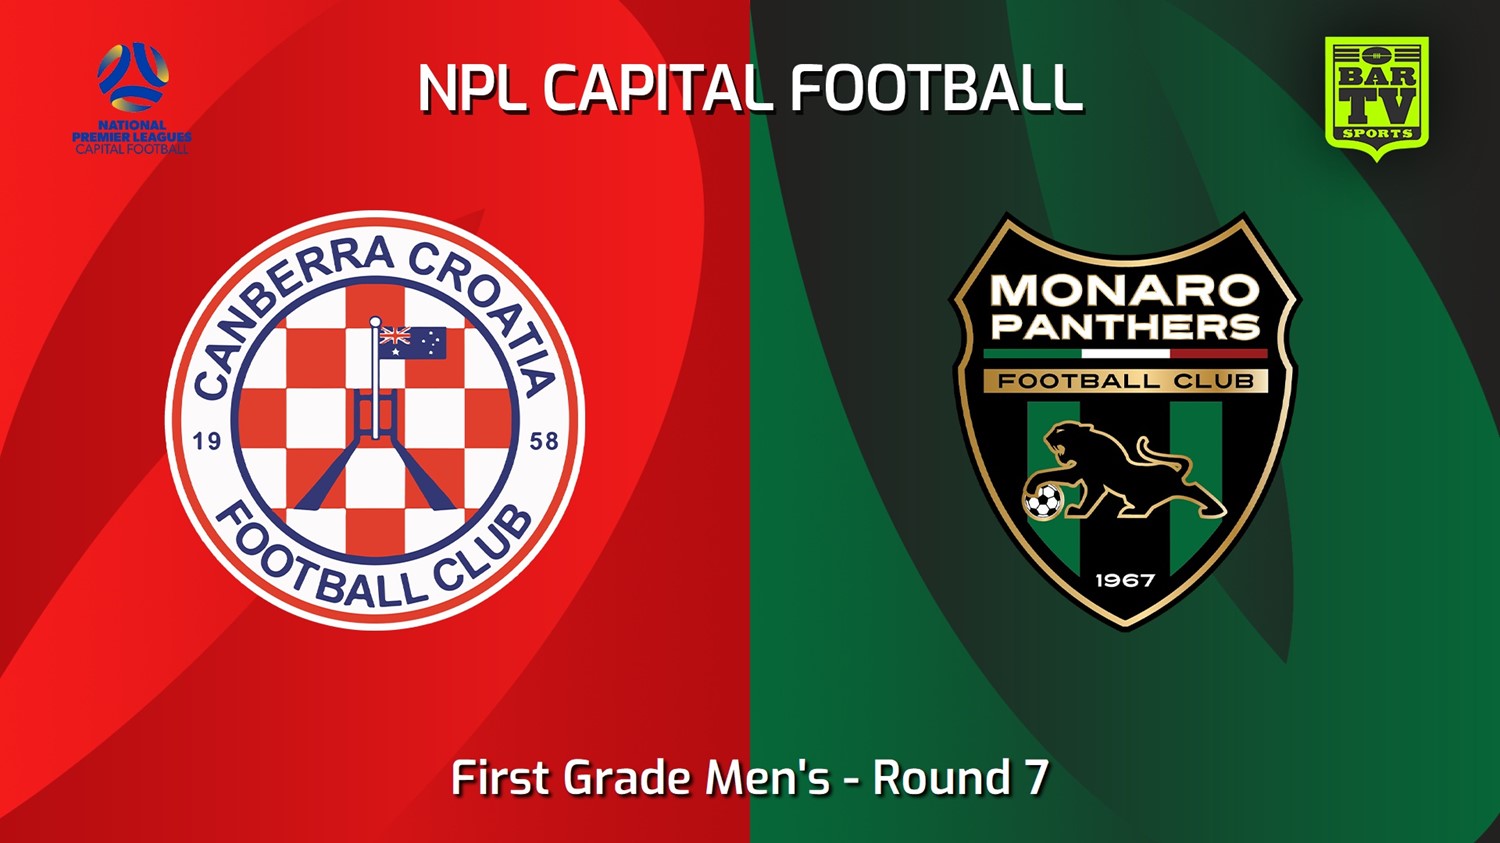 240519-video-Capital NPL Round 7 - Canberra Croatia FC v Monaro Panthers Minigame Slate Image